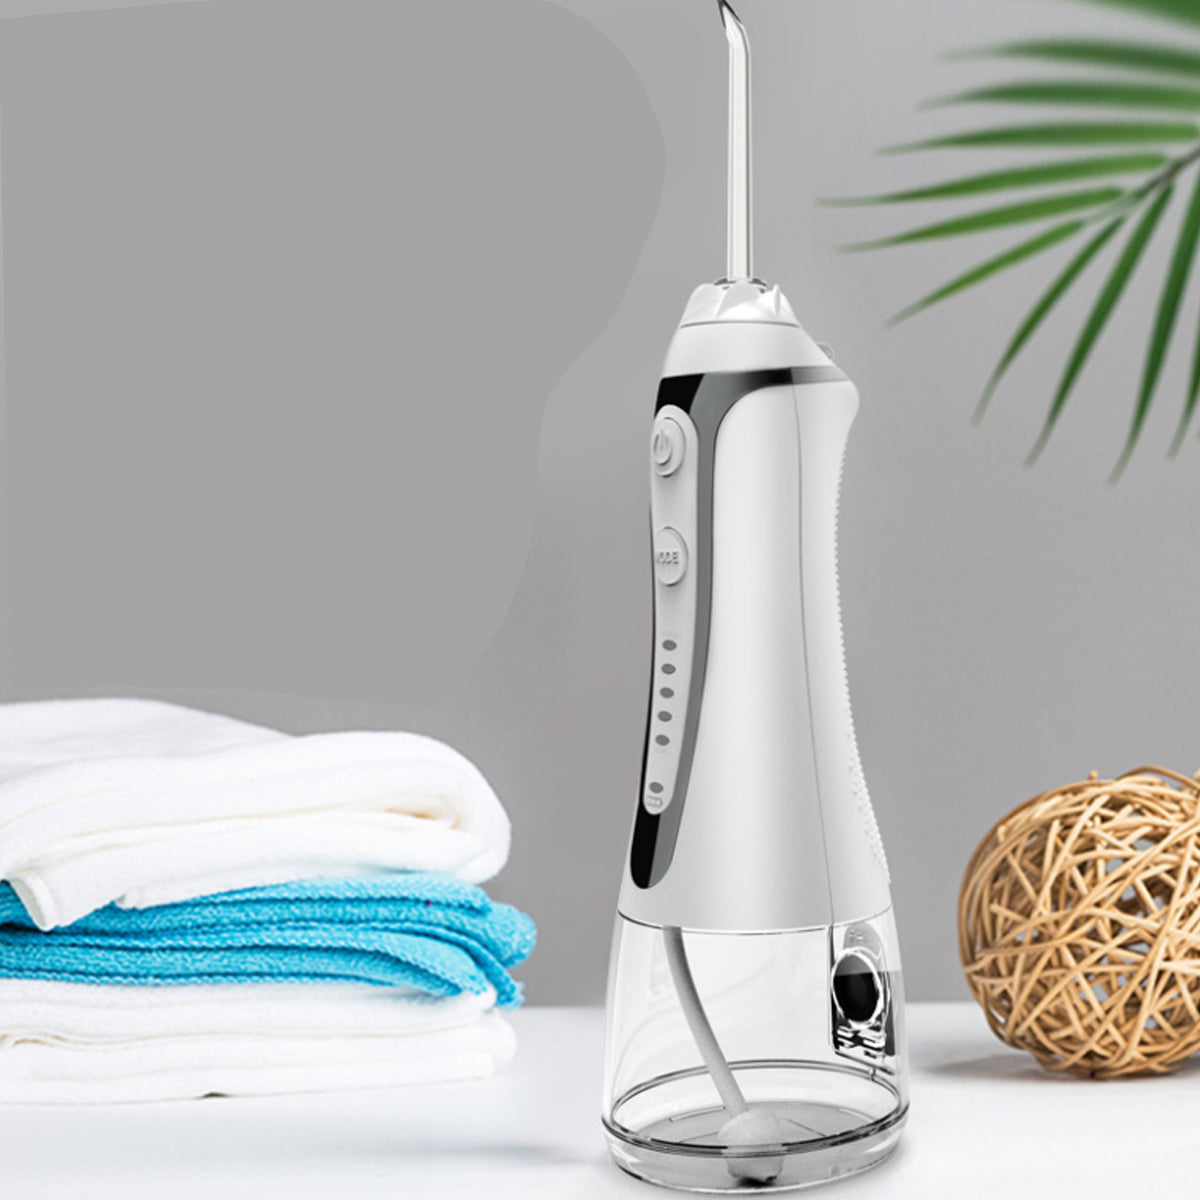  Portable Water Flosser And Pik For Dental Hygiene by VistaShops VistaShops Perfumarie